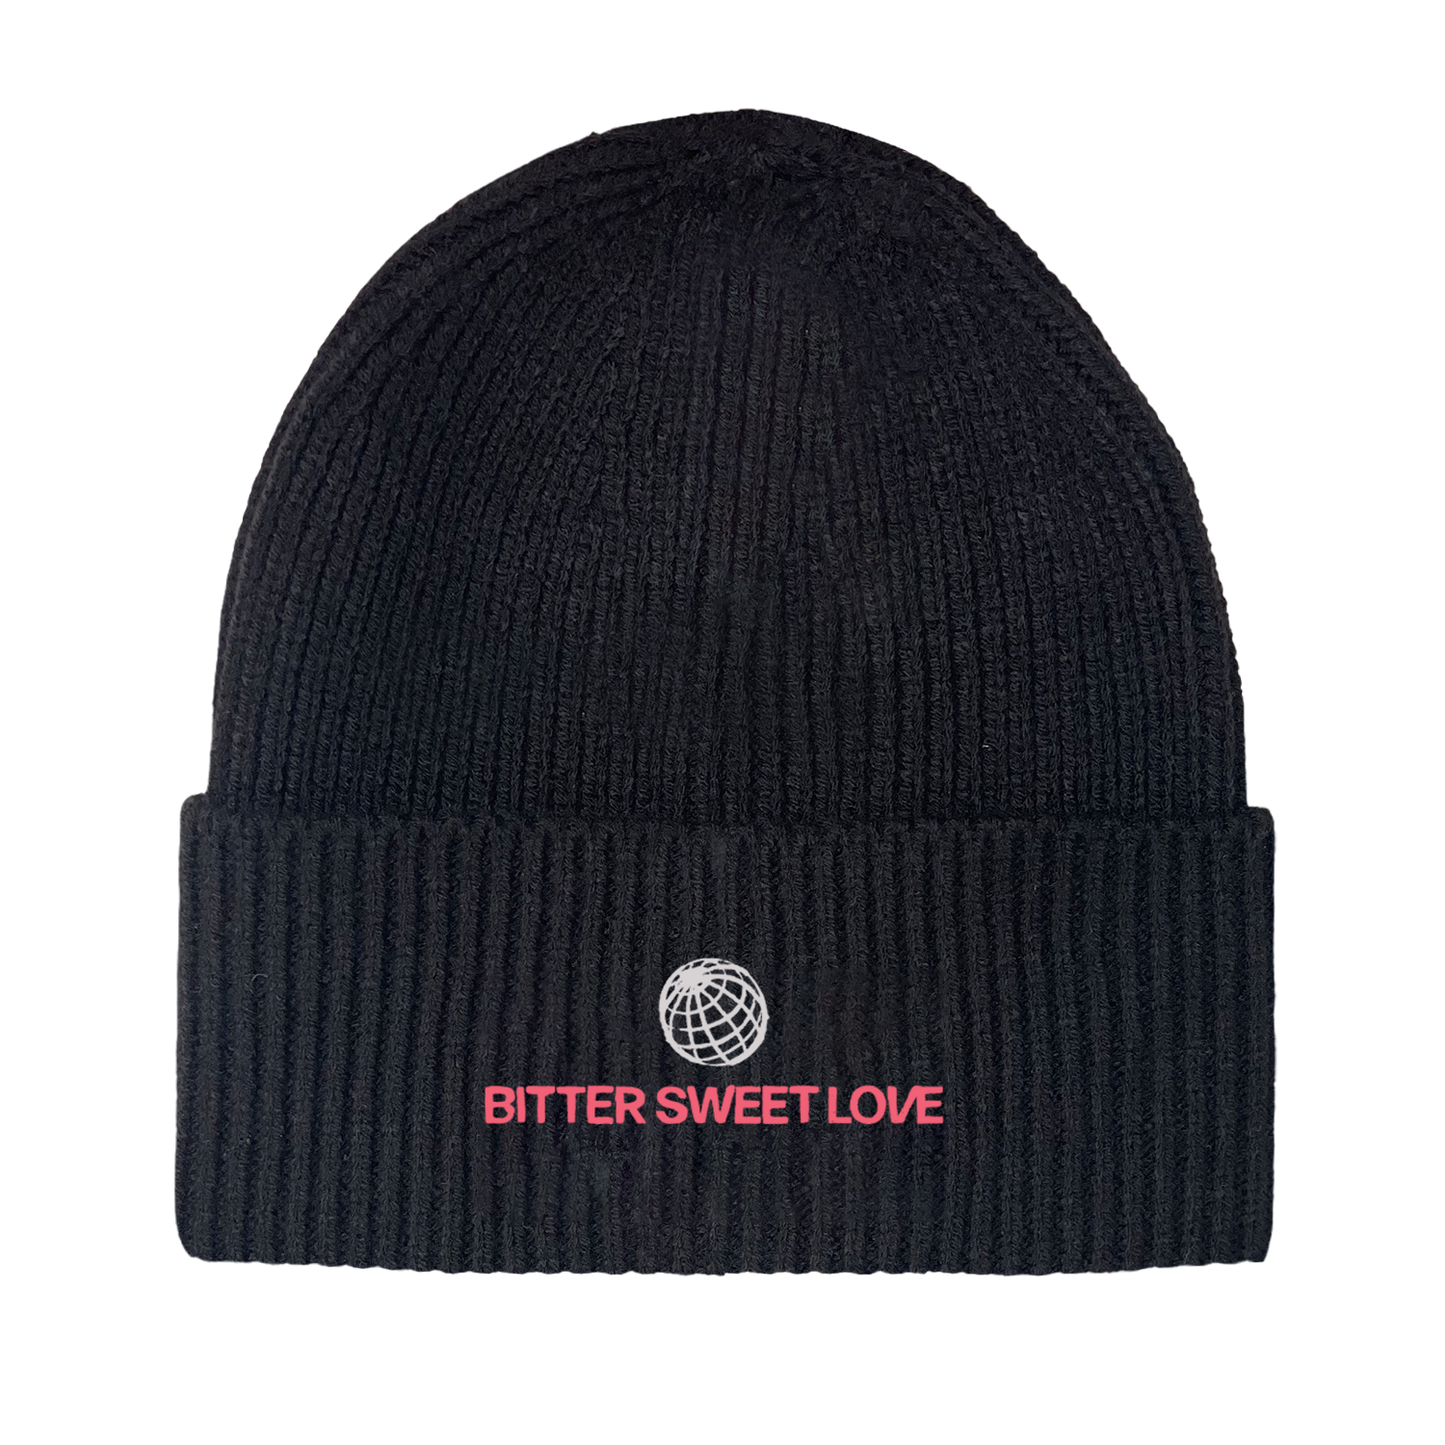 Bitter Sweet Love Tour Beanie